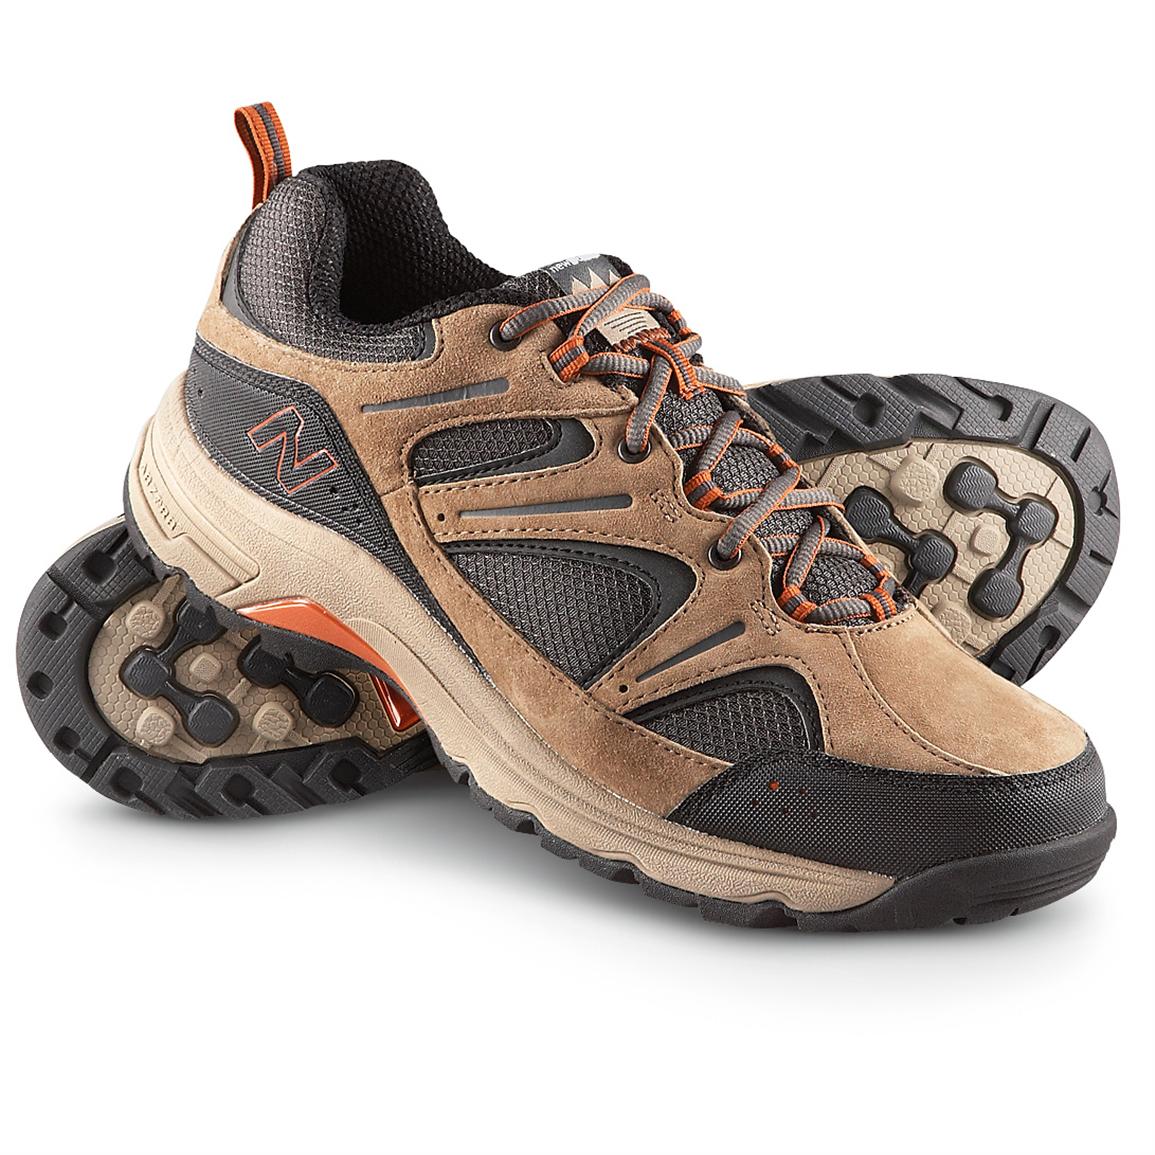 New Balance 759 Men's Walking Shoes - 228072, Running Shoes & Sneakers